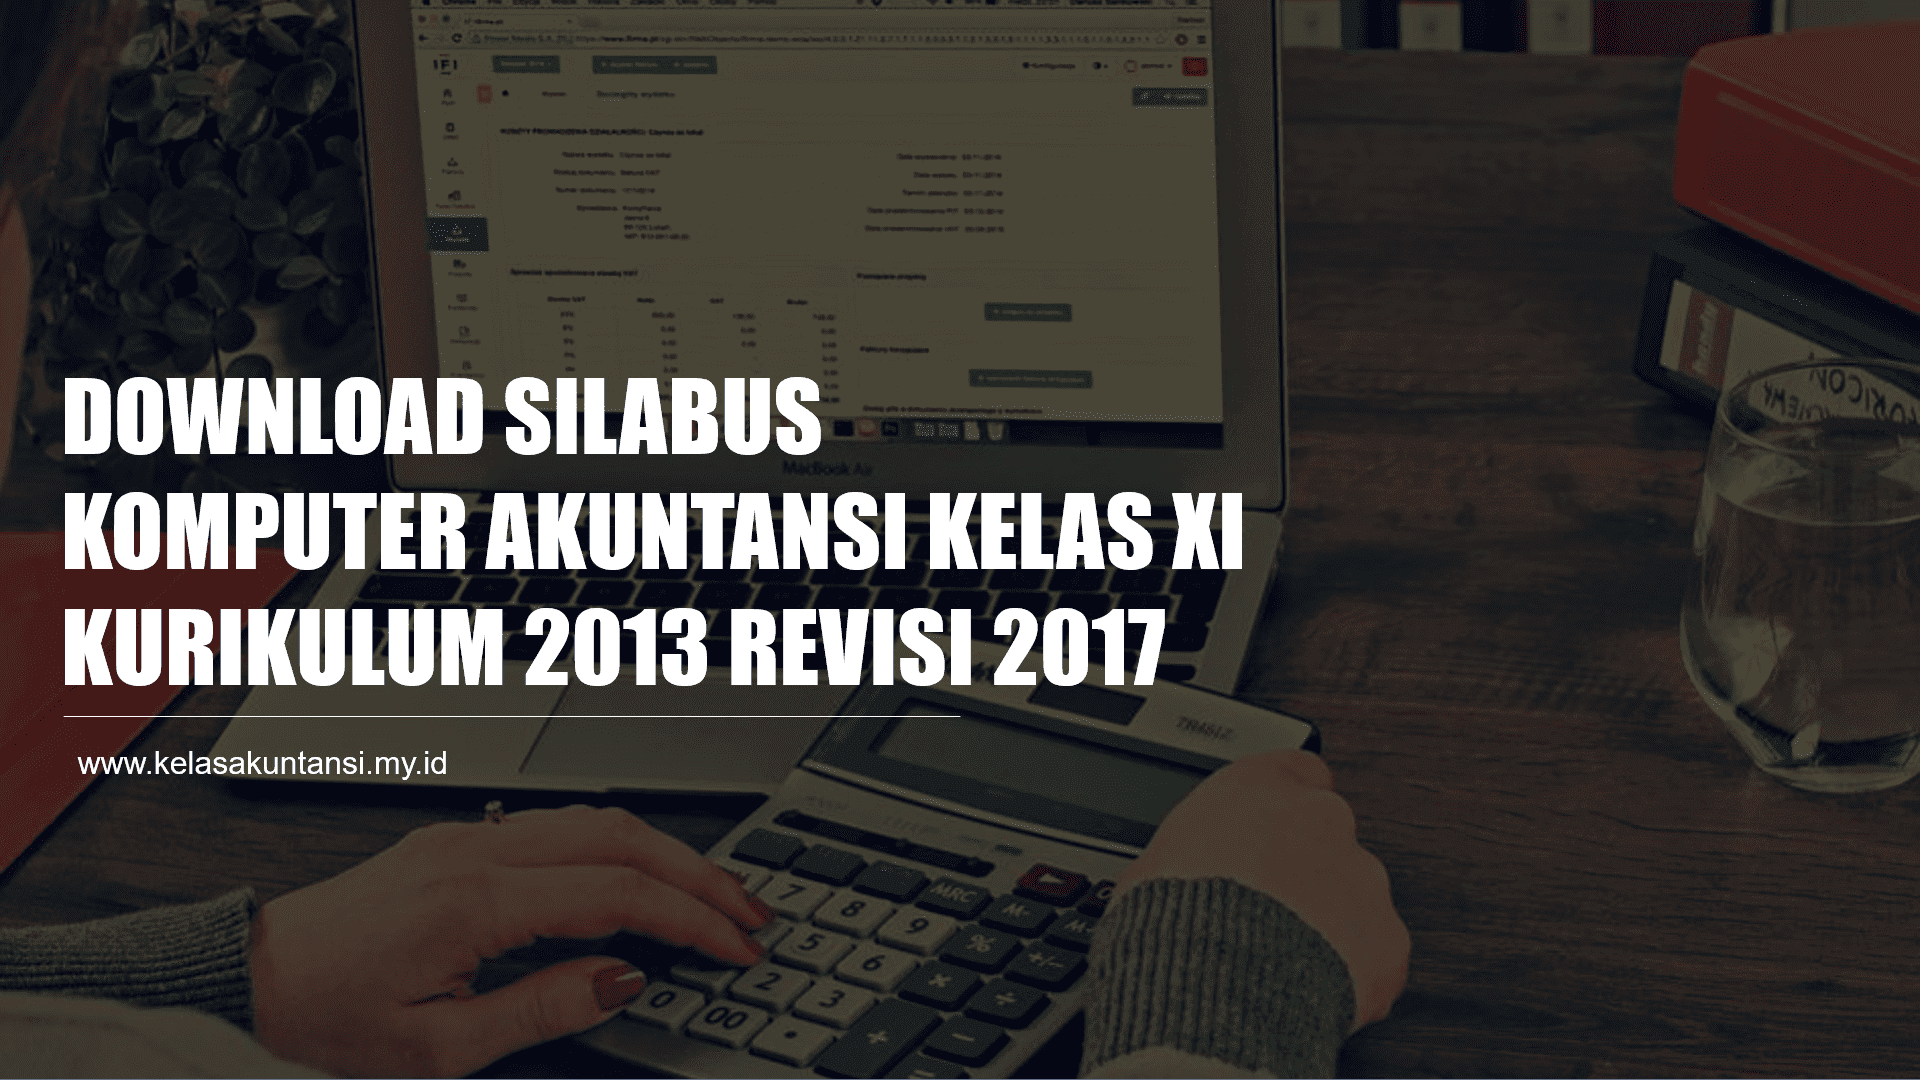 Download Silabus Komputer Akuntansi SMK Kelas XI Kurikulum 2013 Revisi